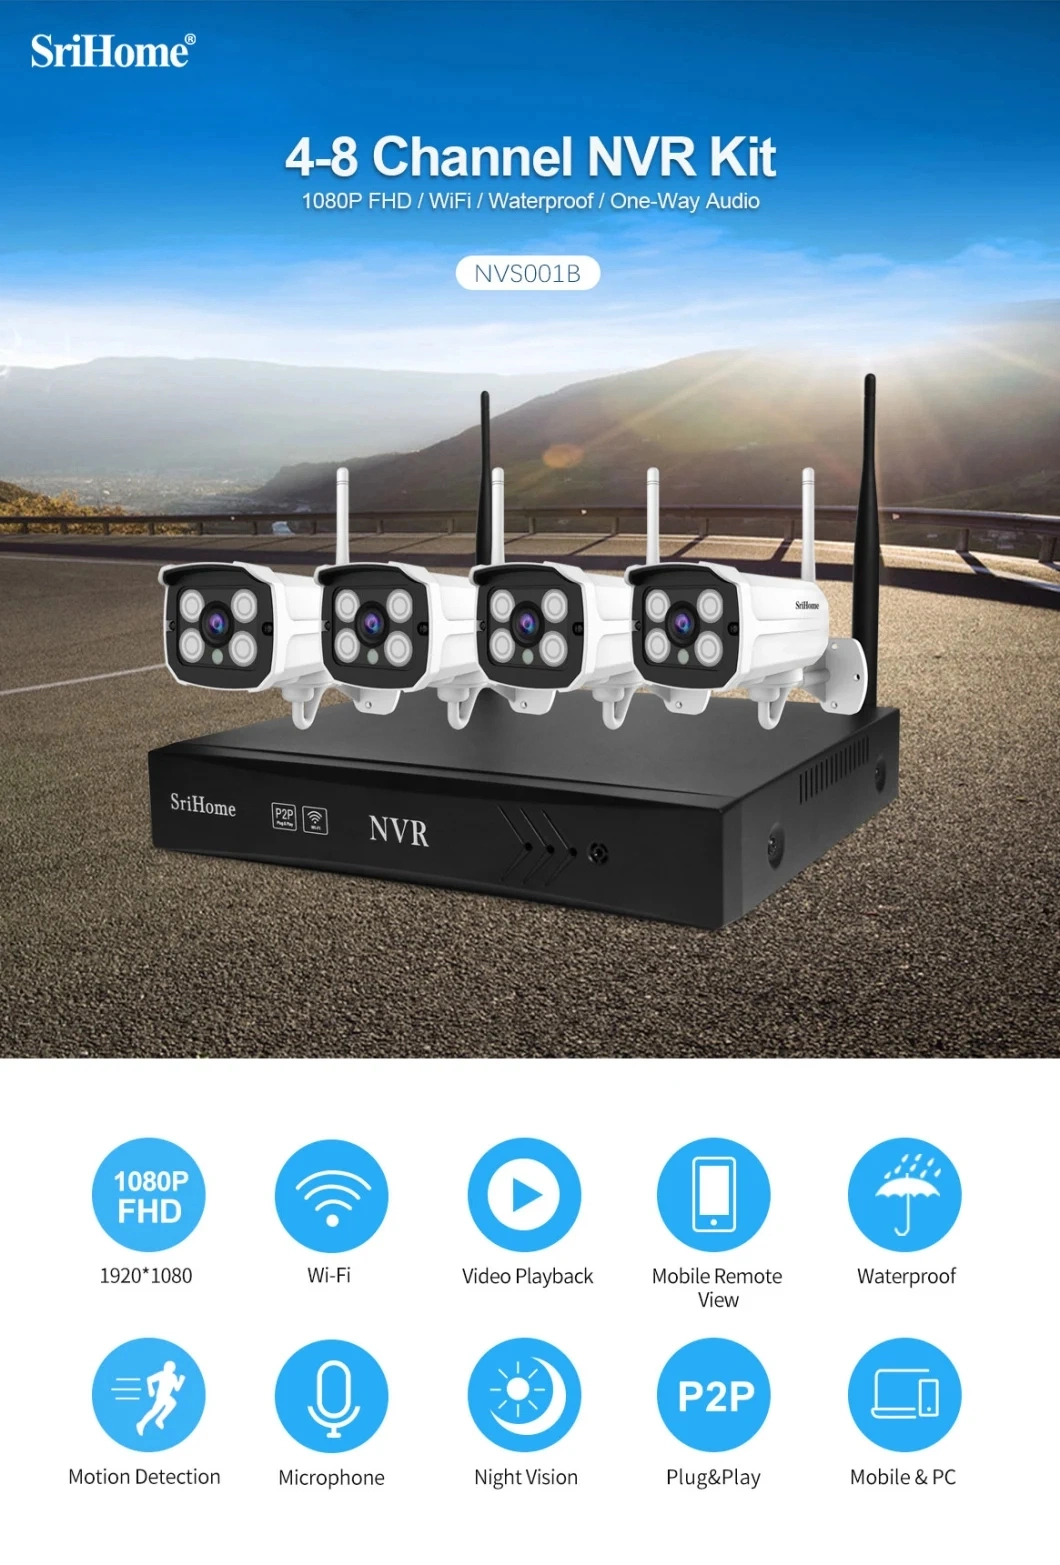 Tuya Wireless 8CH 2MP Waterproof NVR Kit WiFi Home Security Camera System